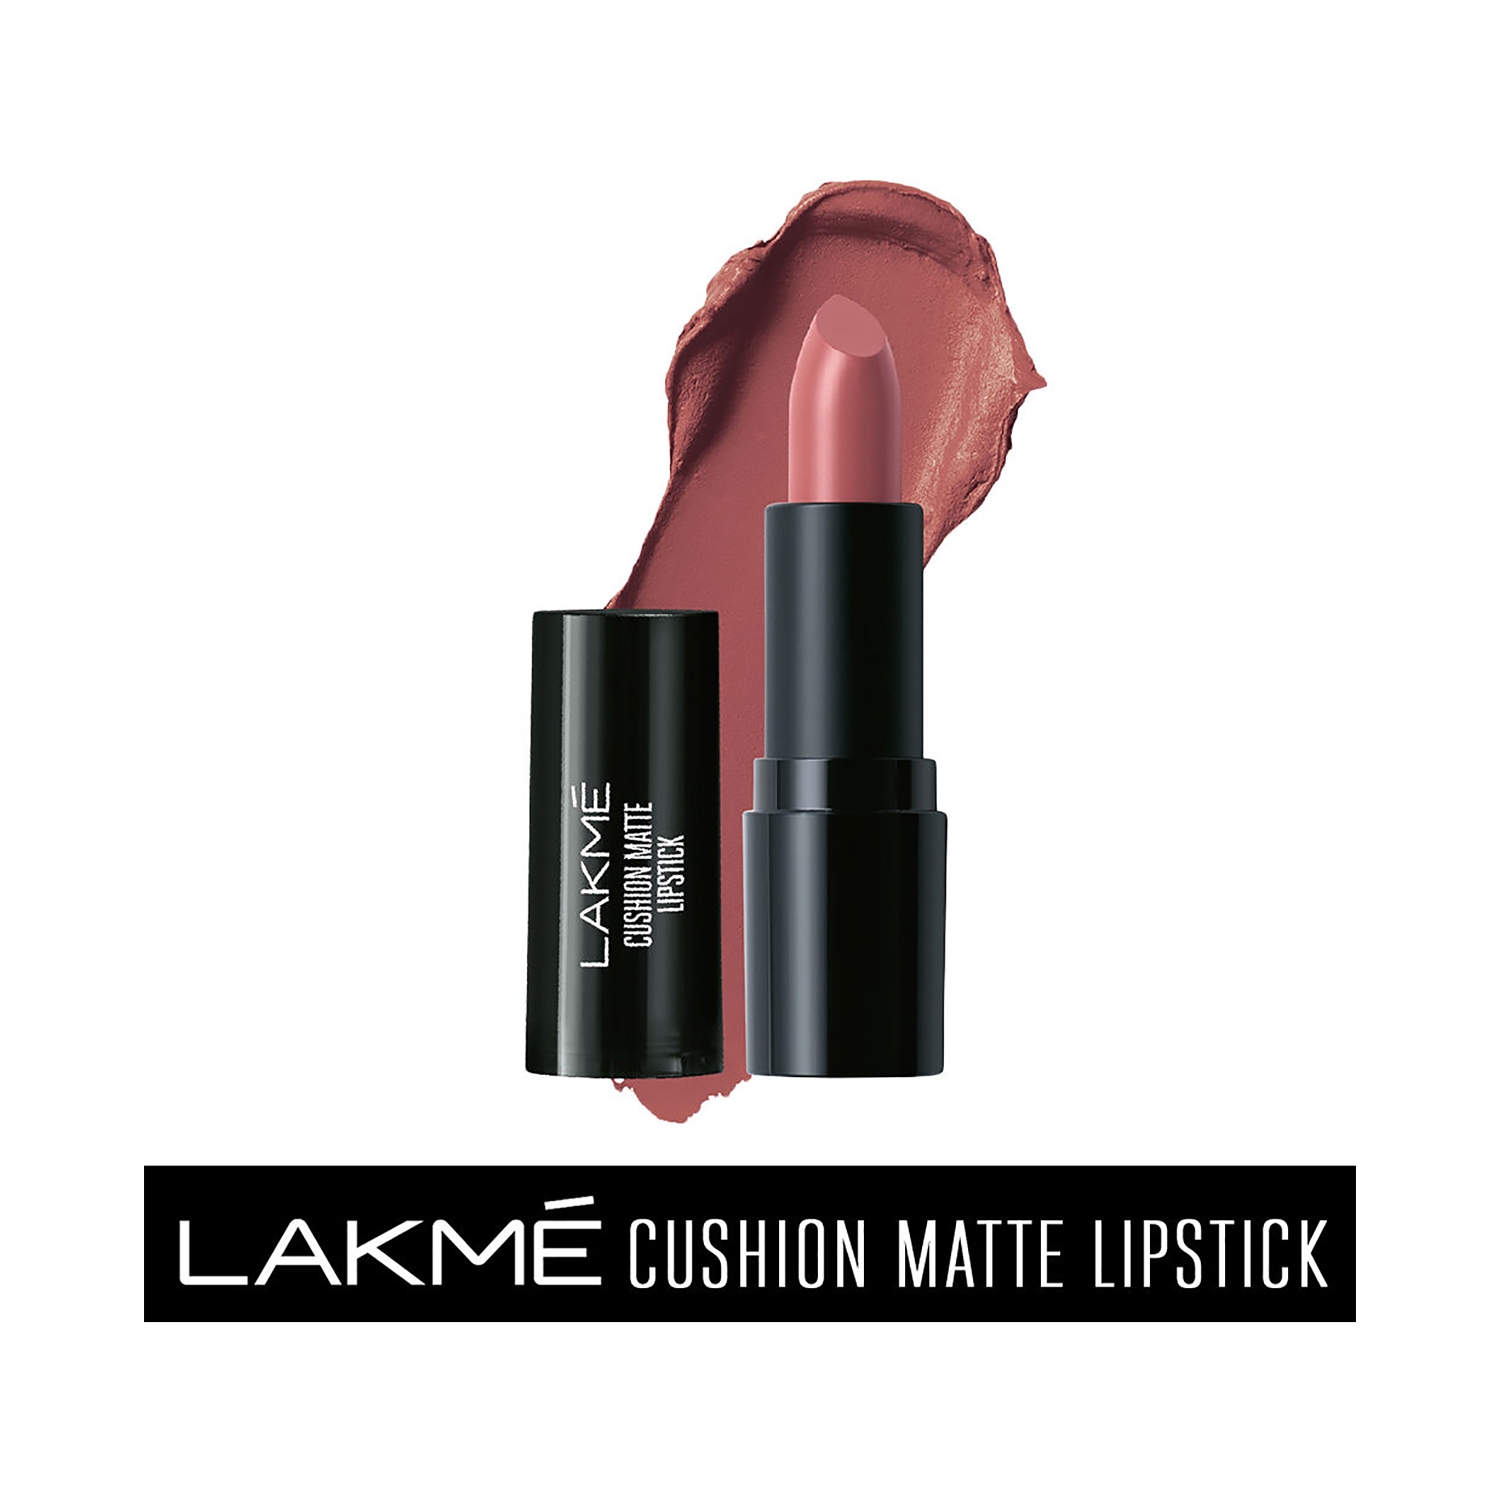 Lakme | Lakme Cushion Matte Lipstick - Pink Rose (4.5g)